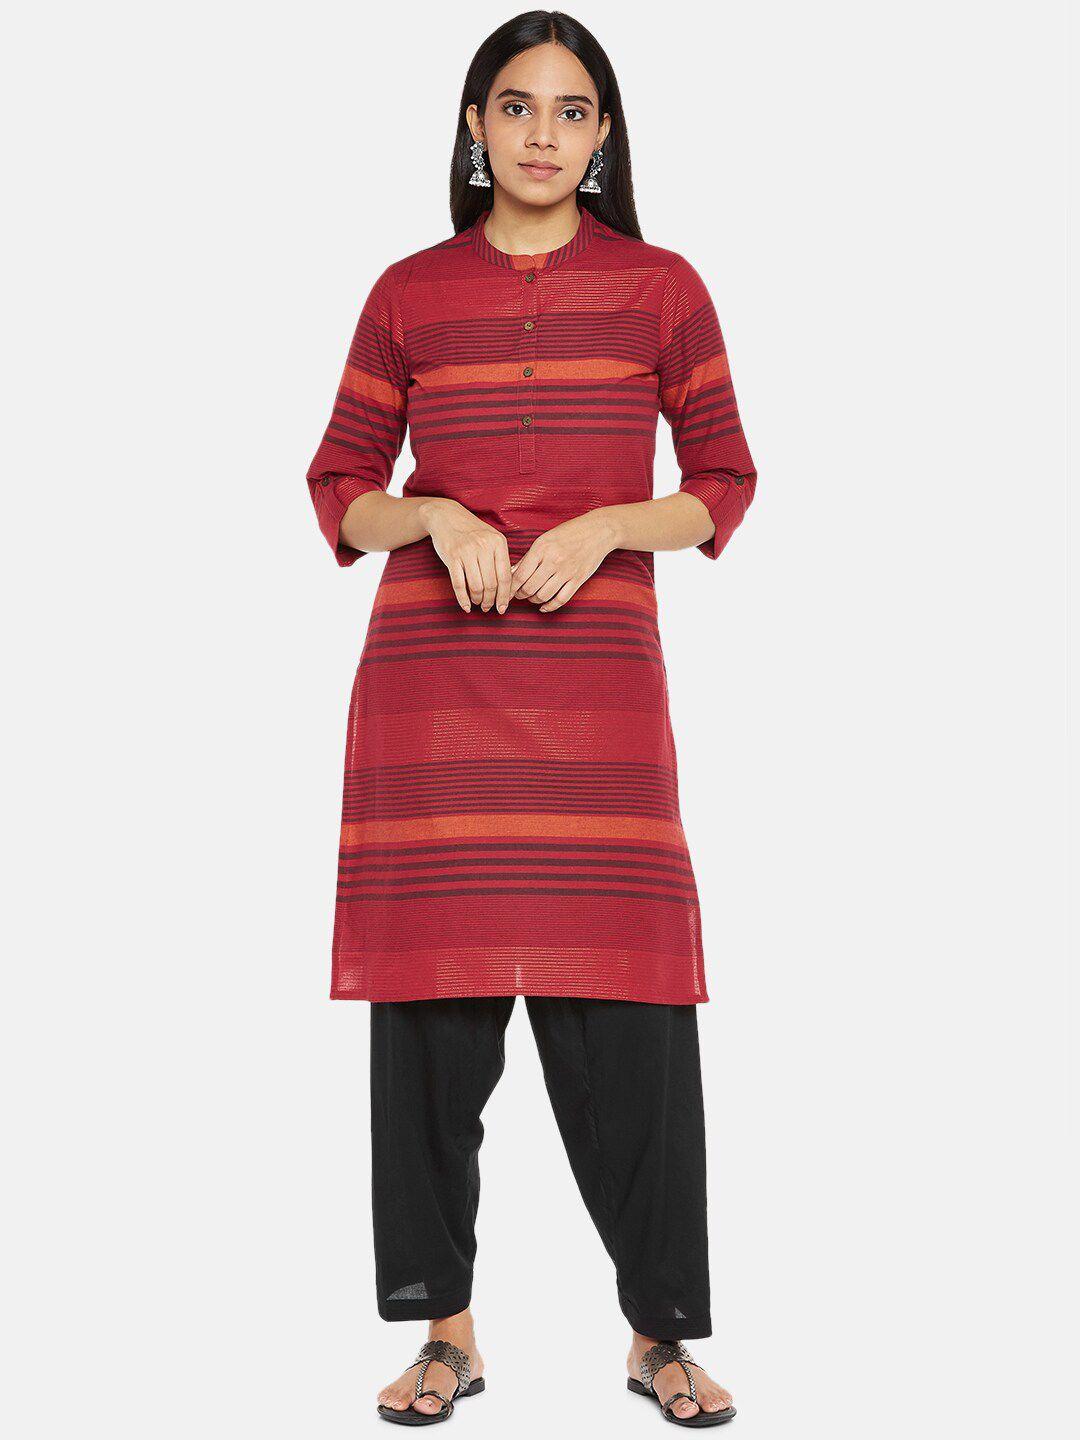 rangmanch by pantaloons women rust red striped kurta